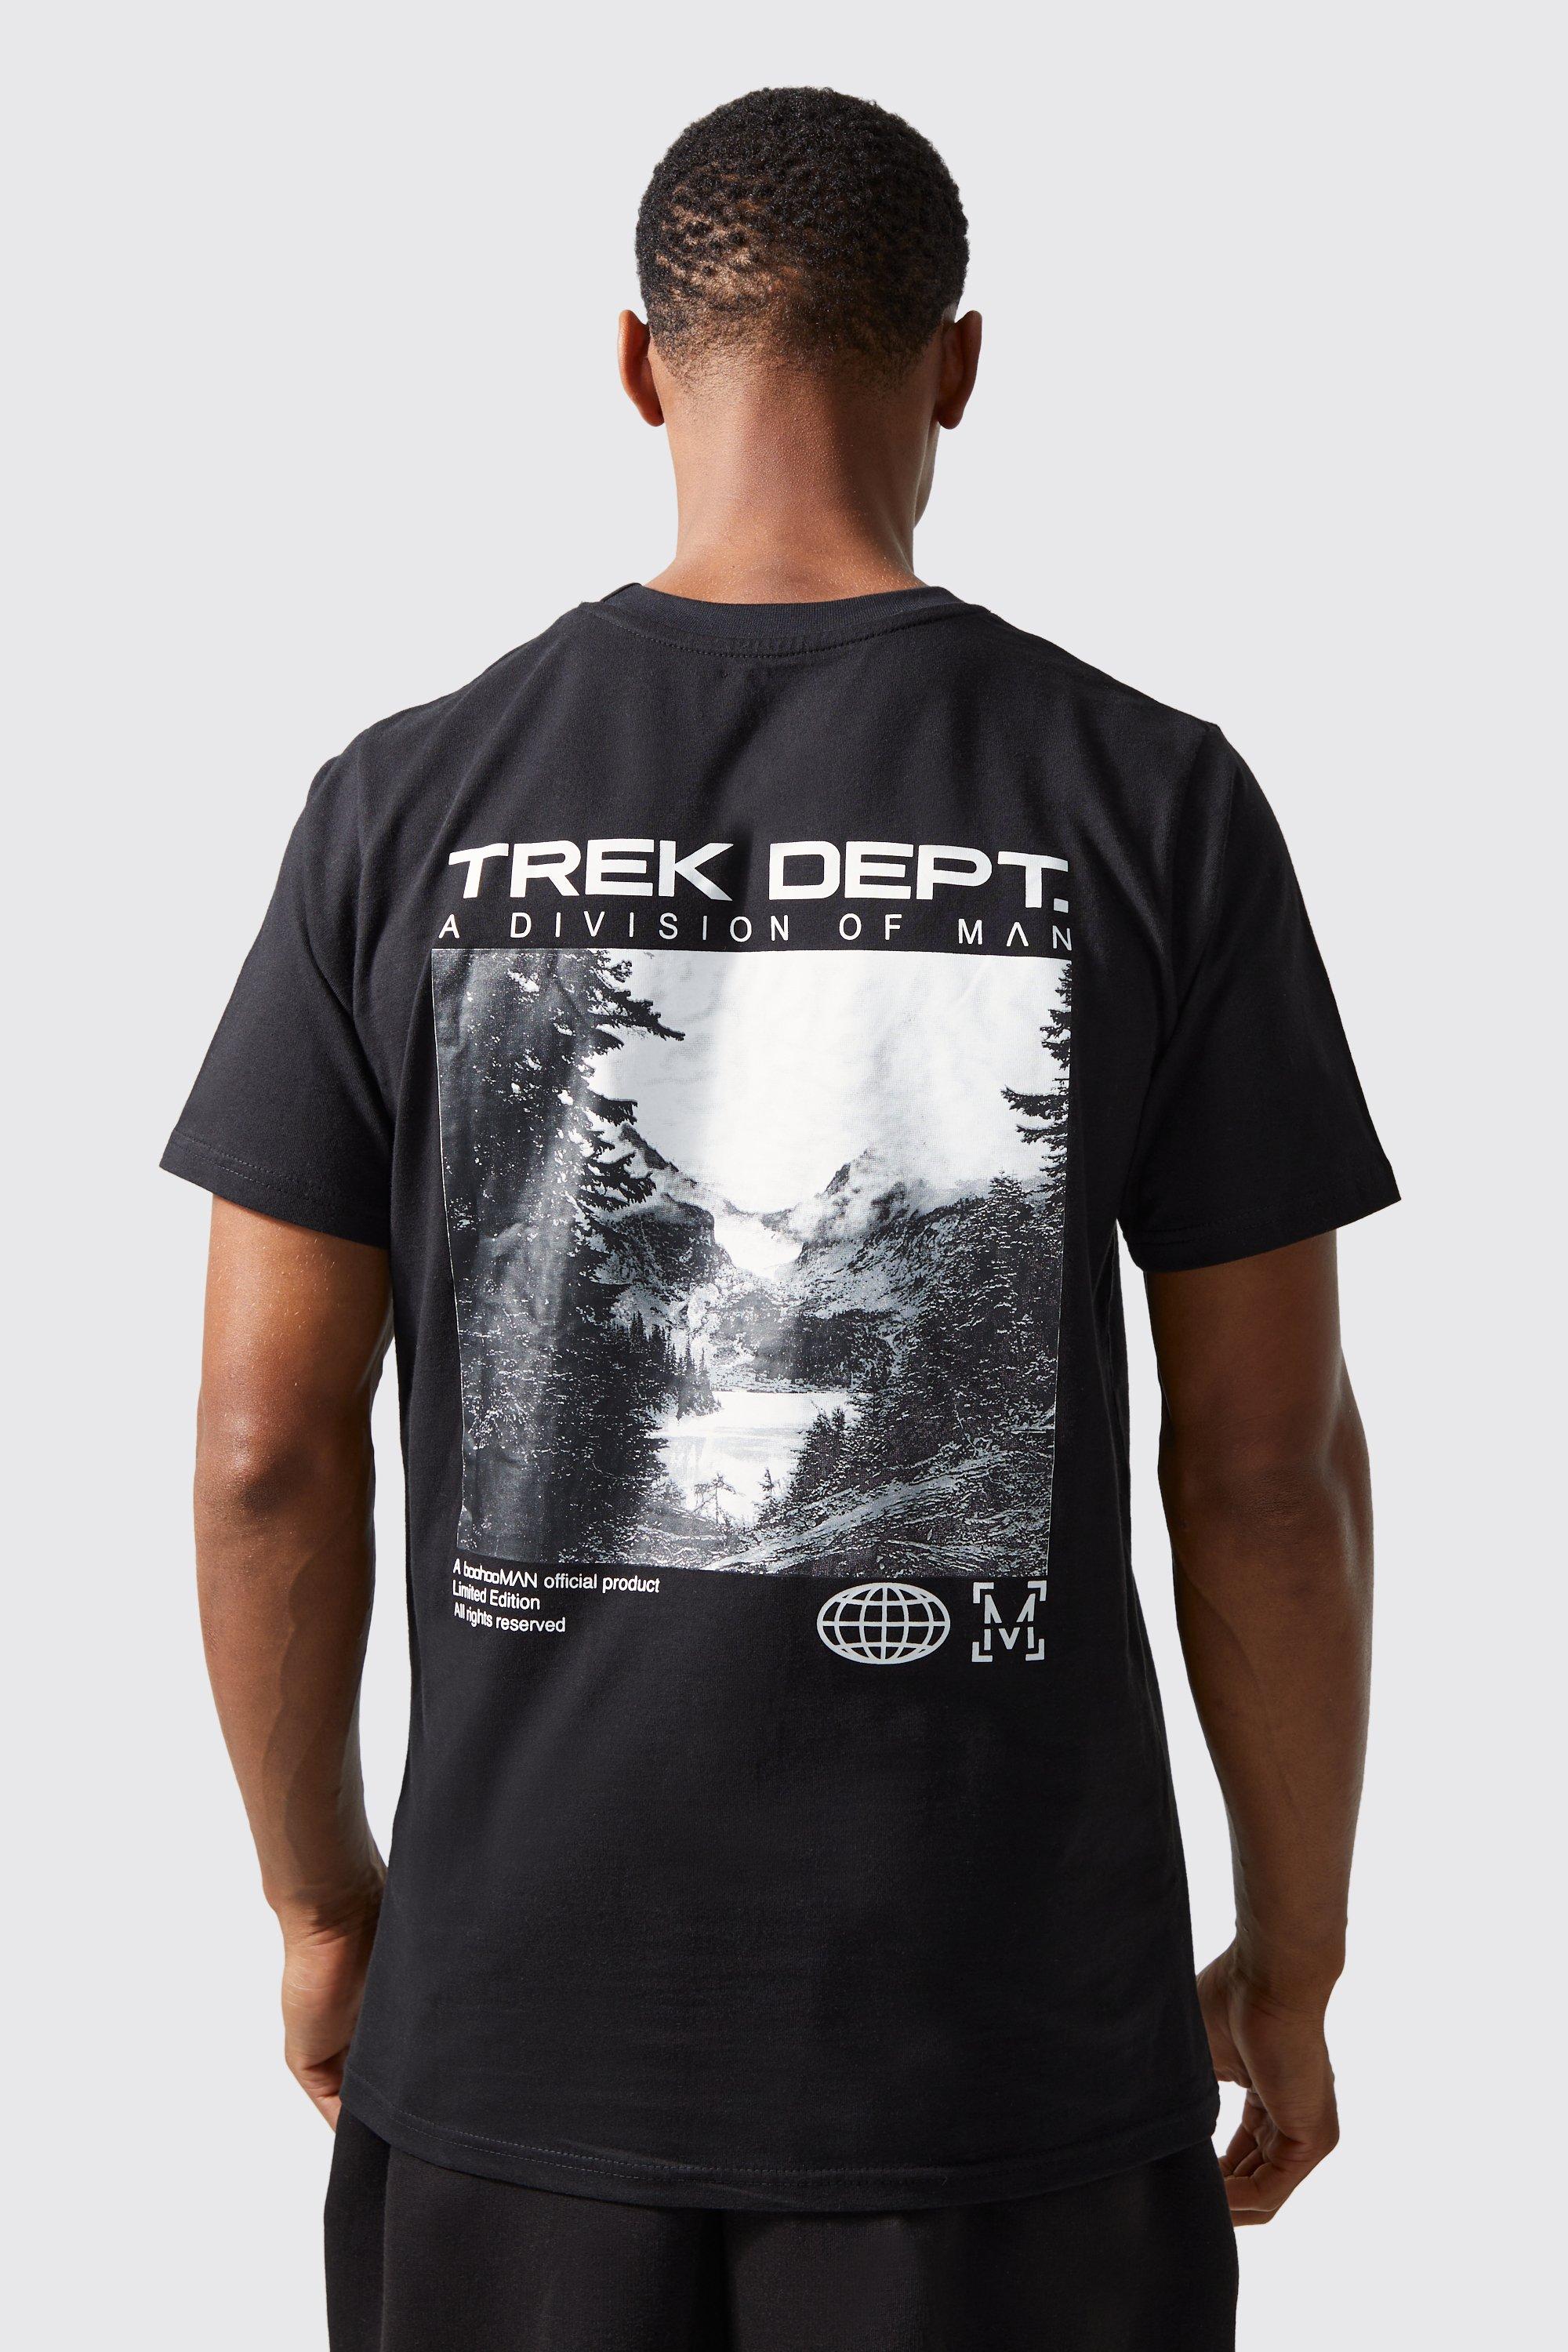 Mens Black Active Heavyweight Trek Dept Graphic T-shirt, Black